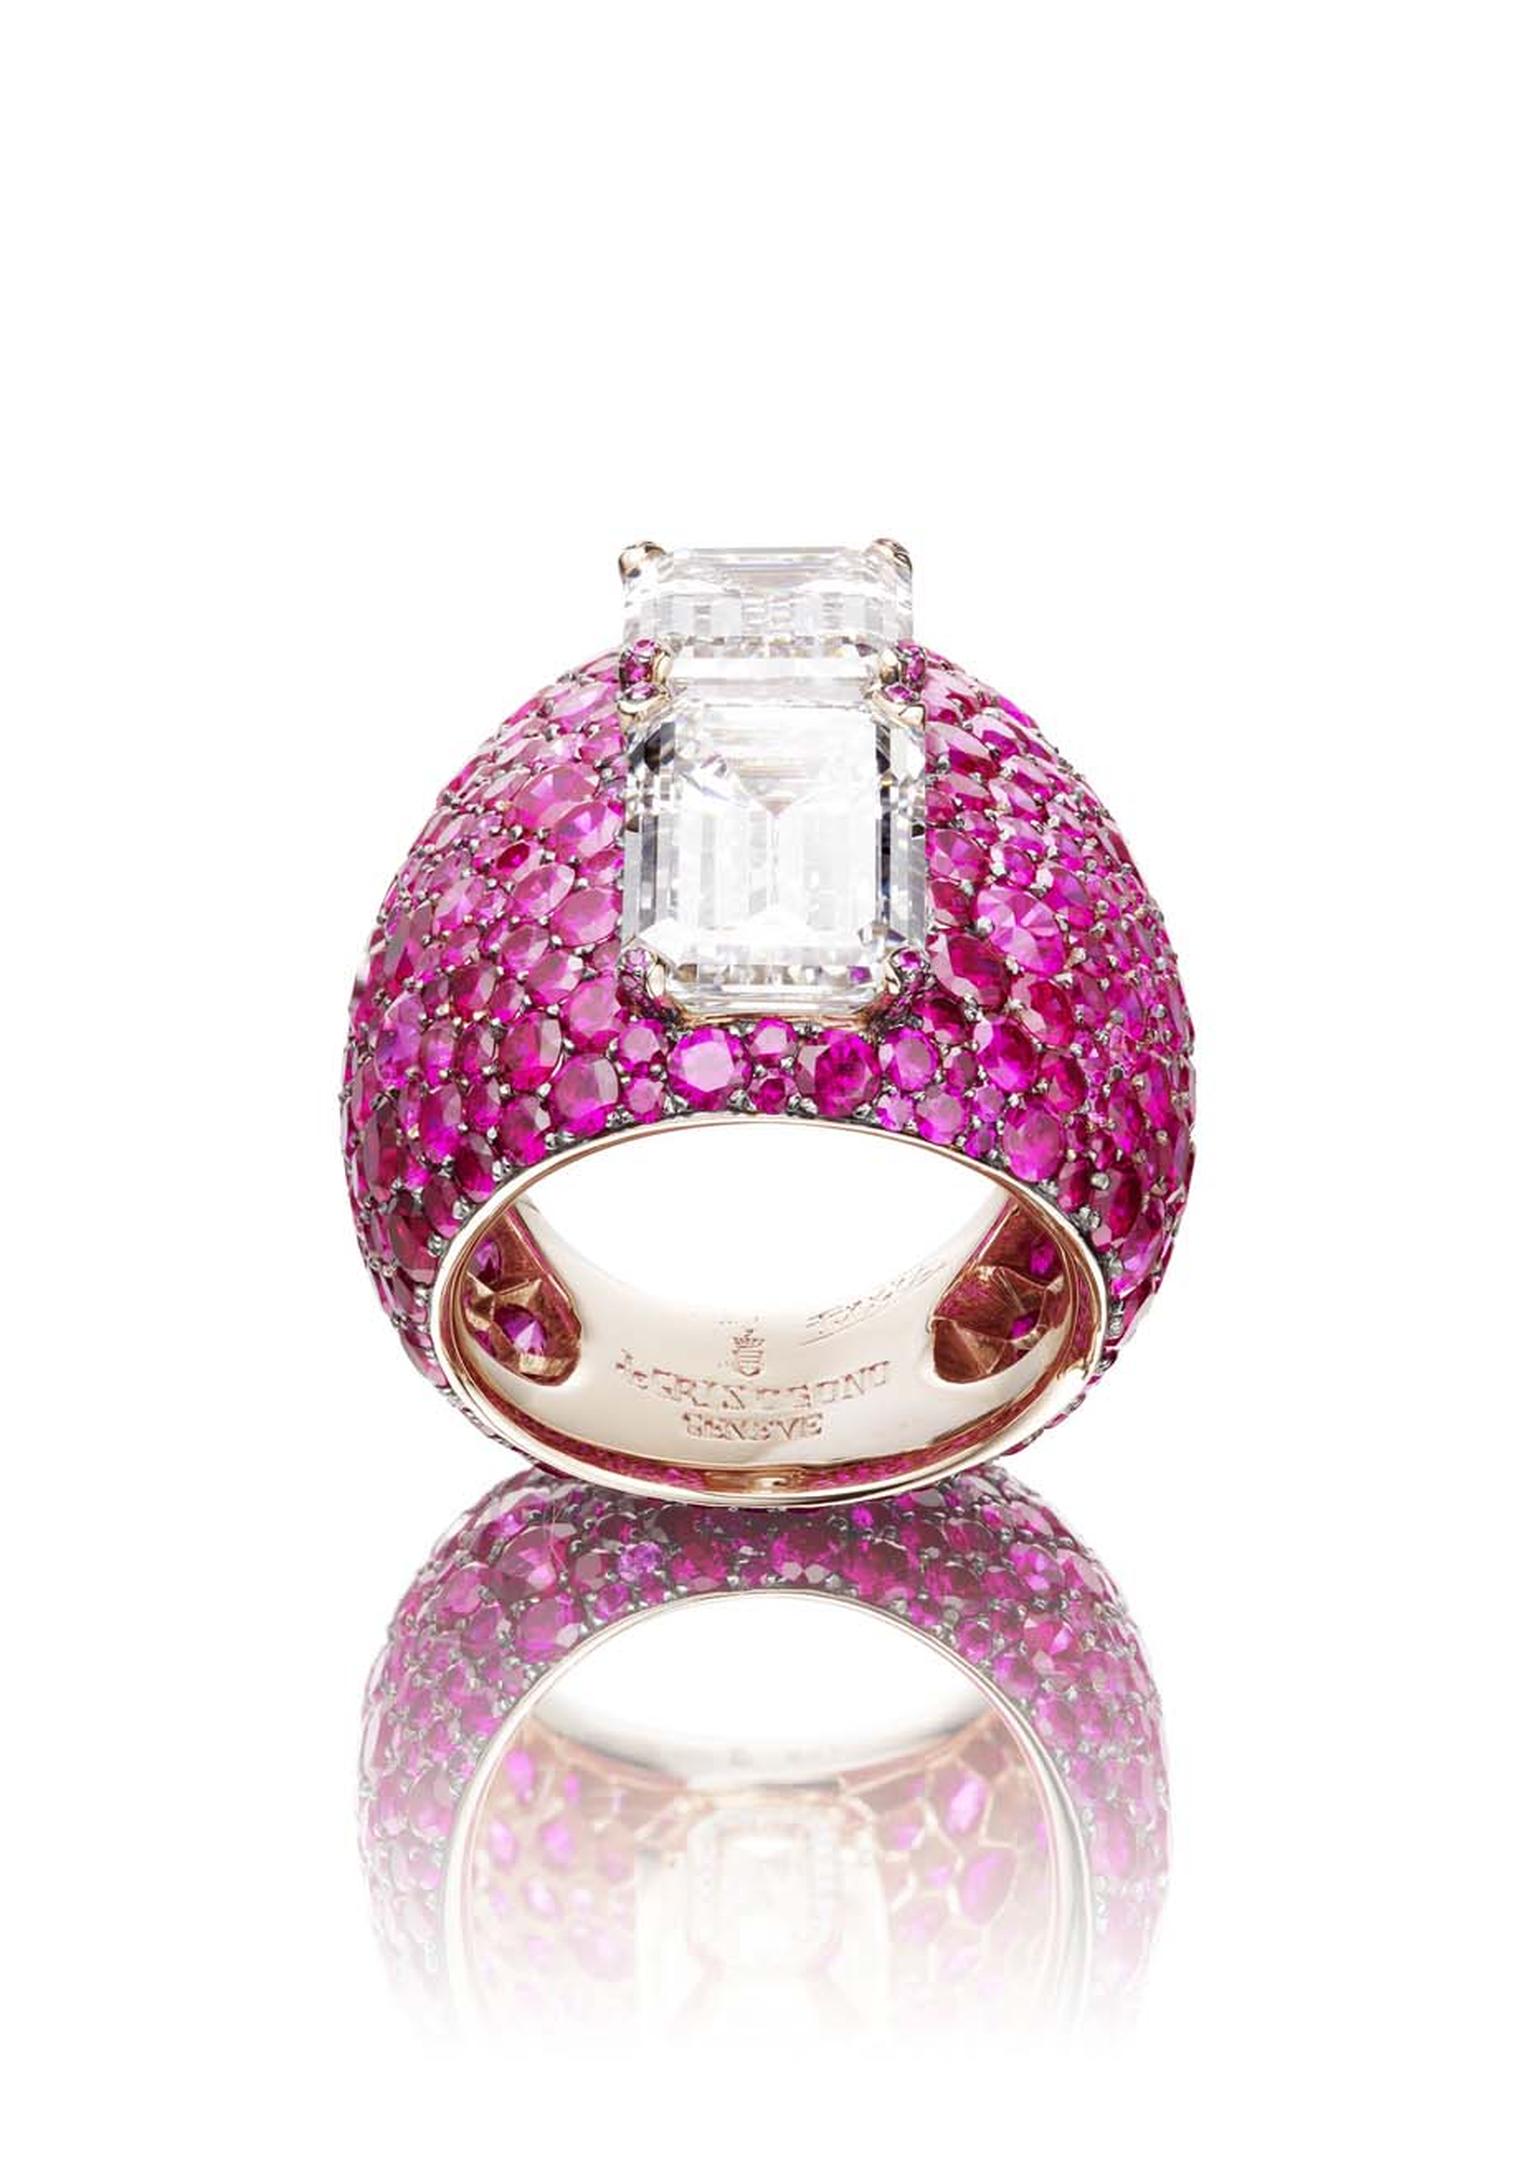 The de GRISOGONO baguette diamond and pink sapphire ring worn by Riley Keough to de GRISOGONO's Eden Roc party